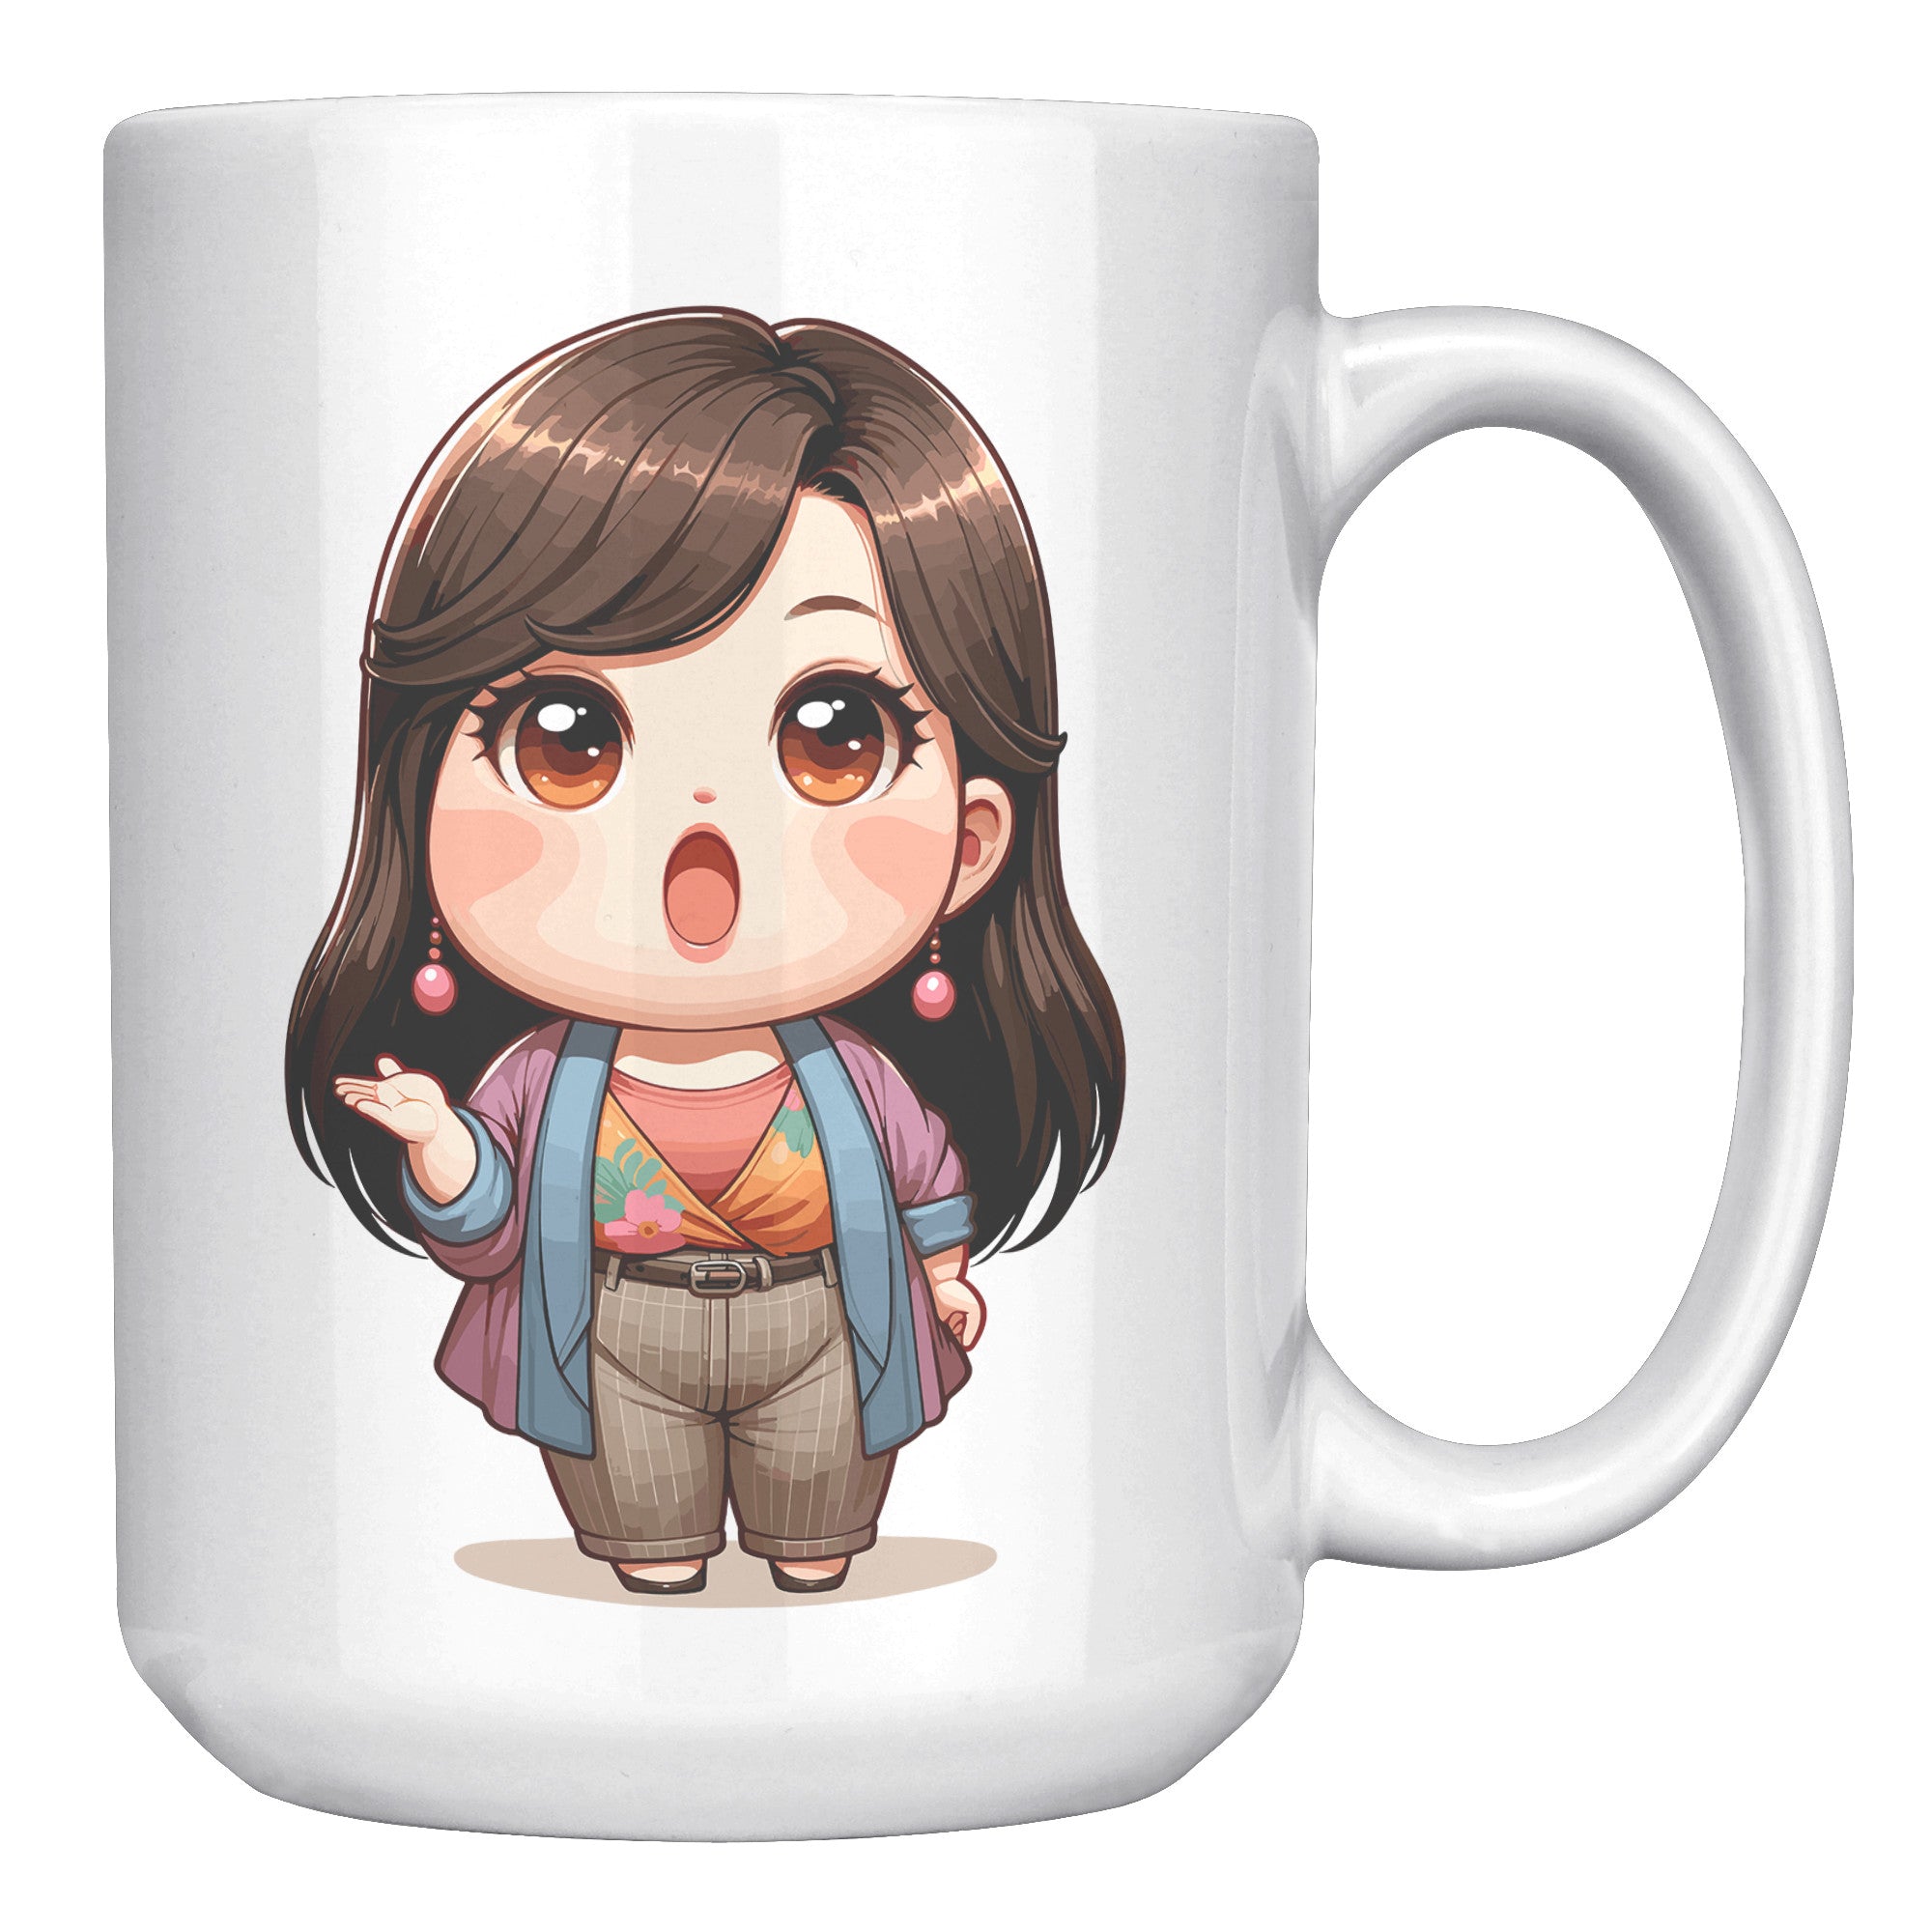 "Marites Gossip Queen Coffee Mug - Cute Cartoon 'Ano Ang Latest?' Cup - Perfect Chismosa Gift - Filipino Slang Tea Mug" - ZZZ1